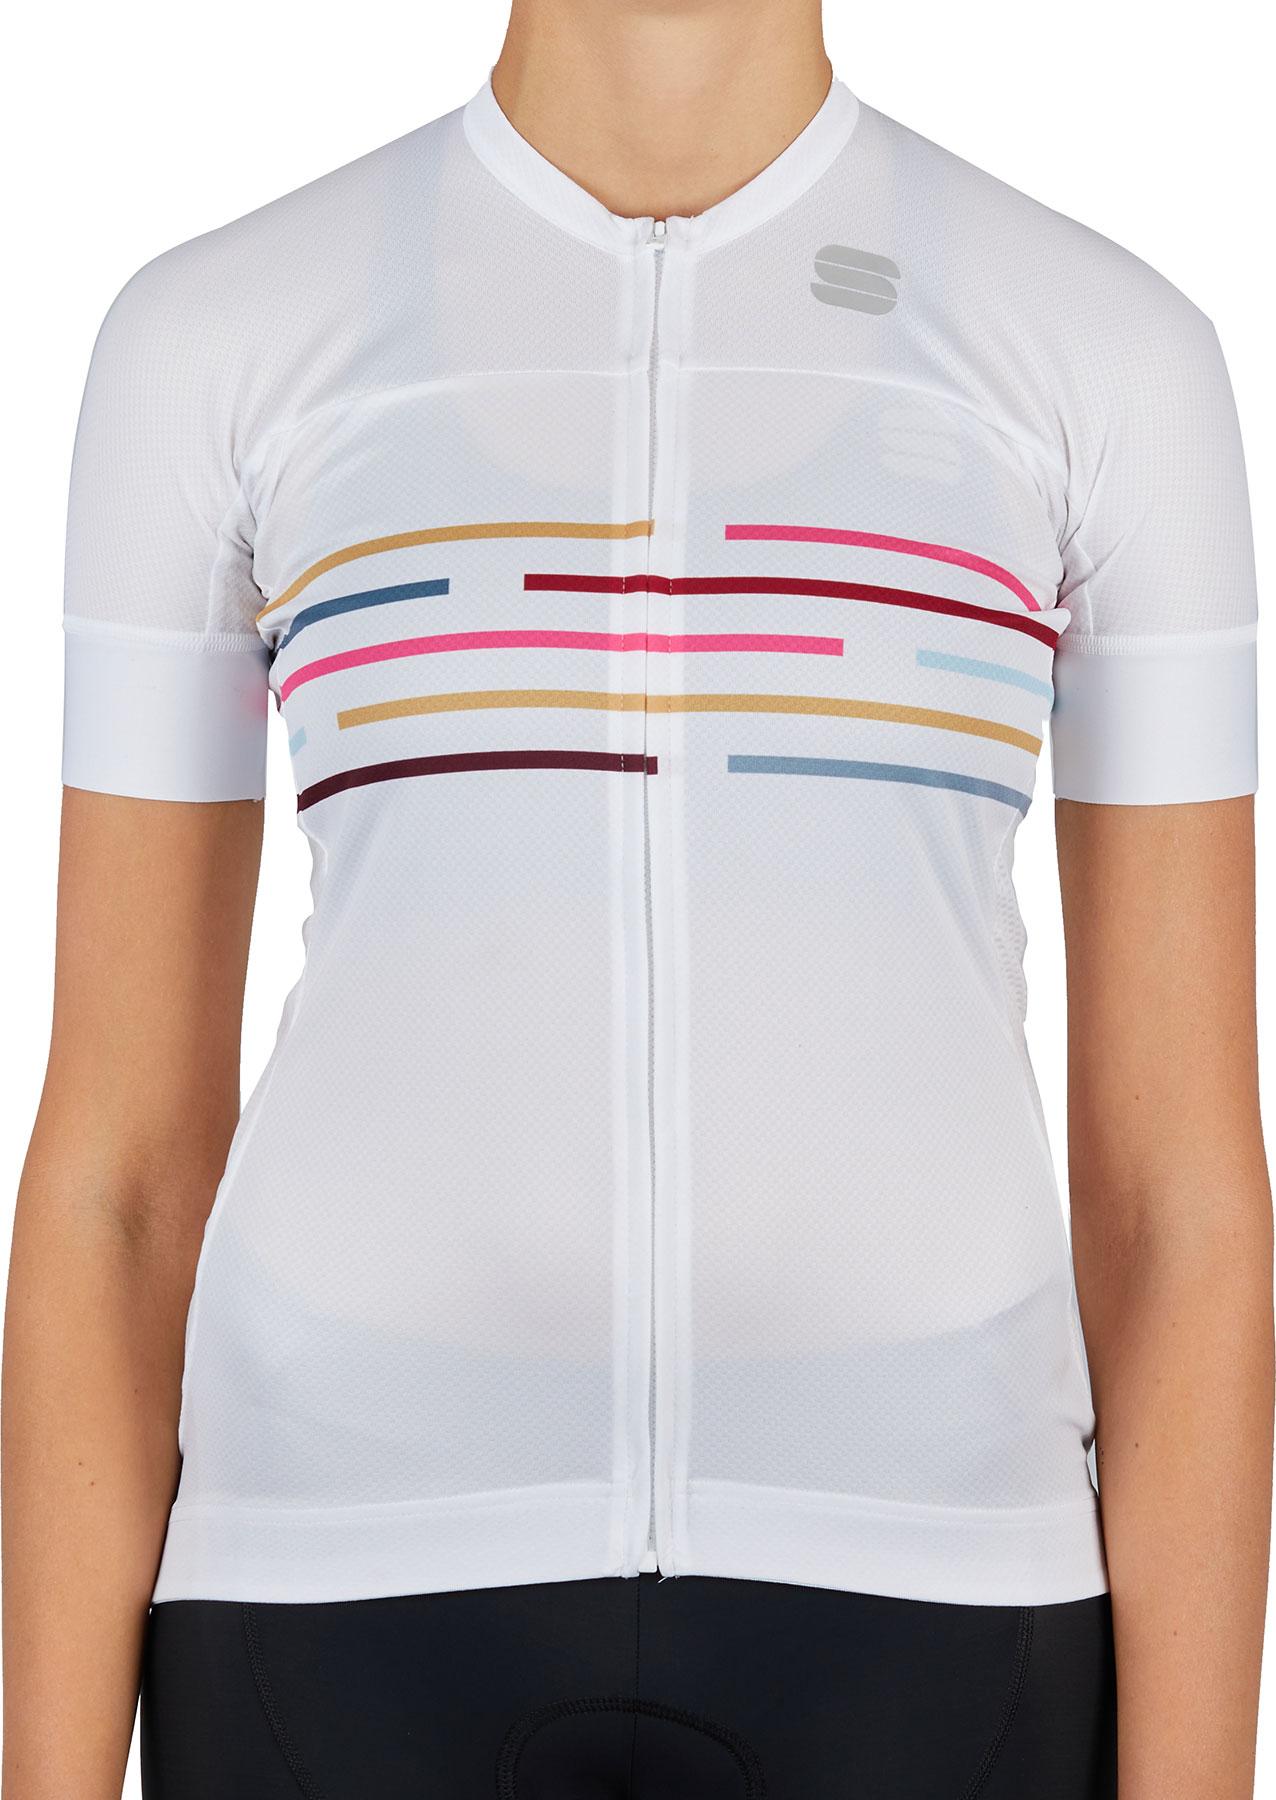 Sportful Womens Velodrome Cycling Jersey  White